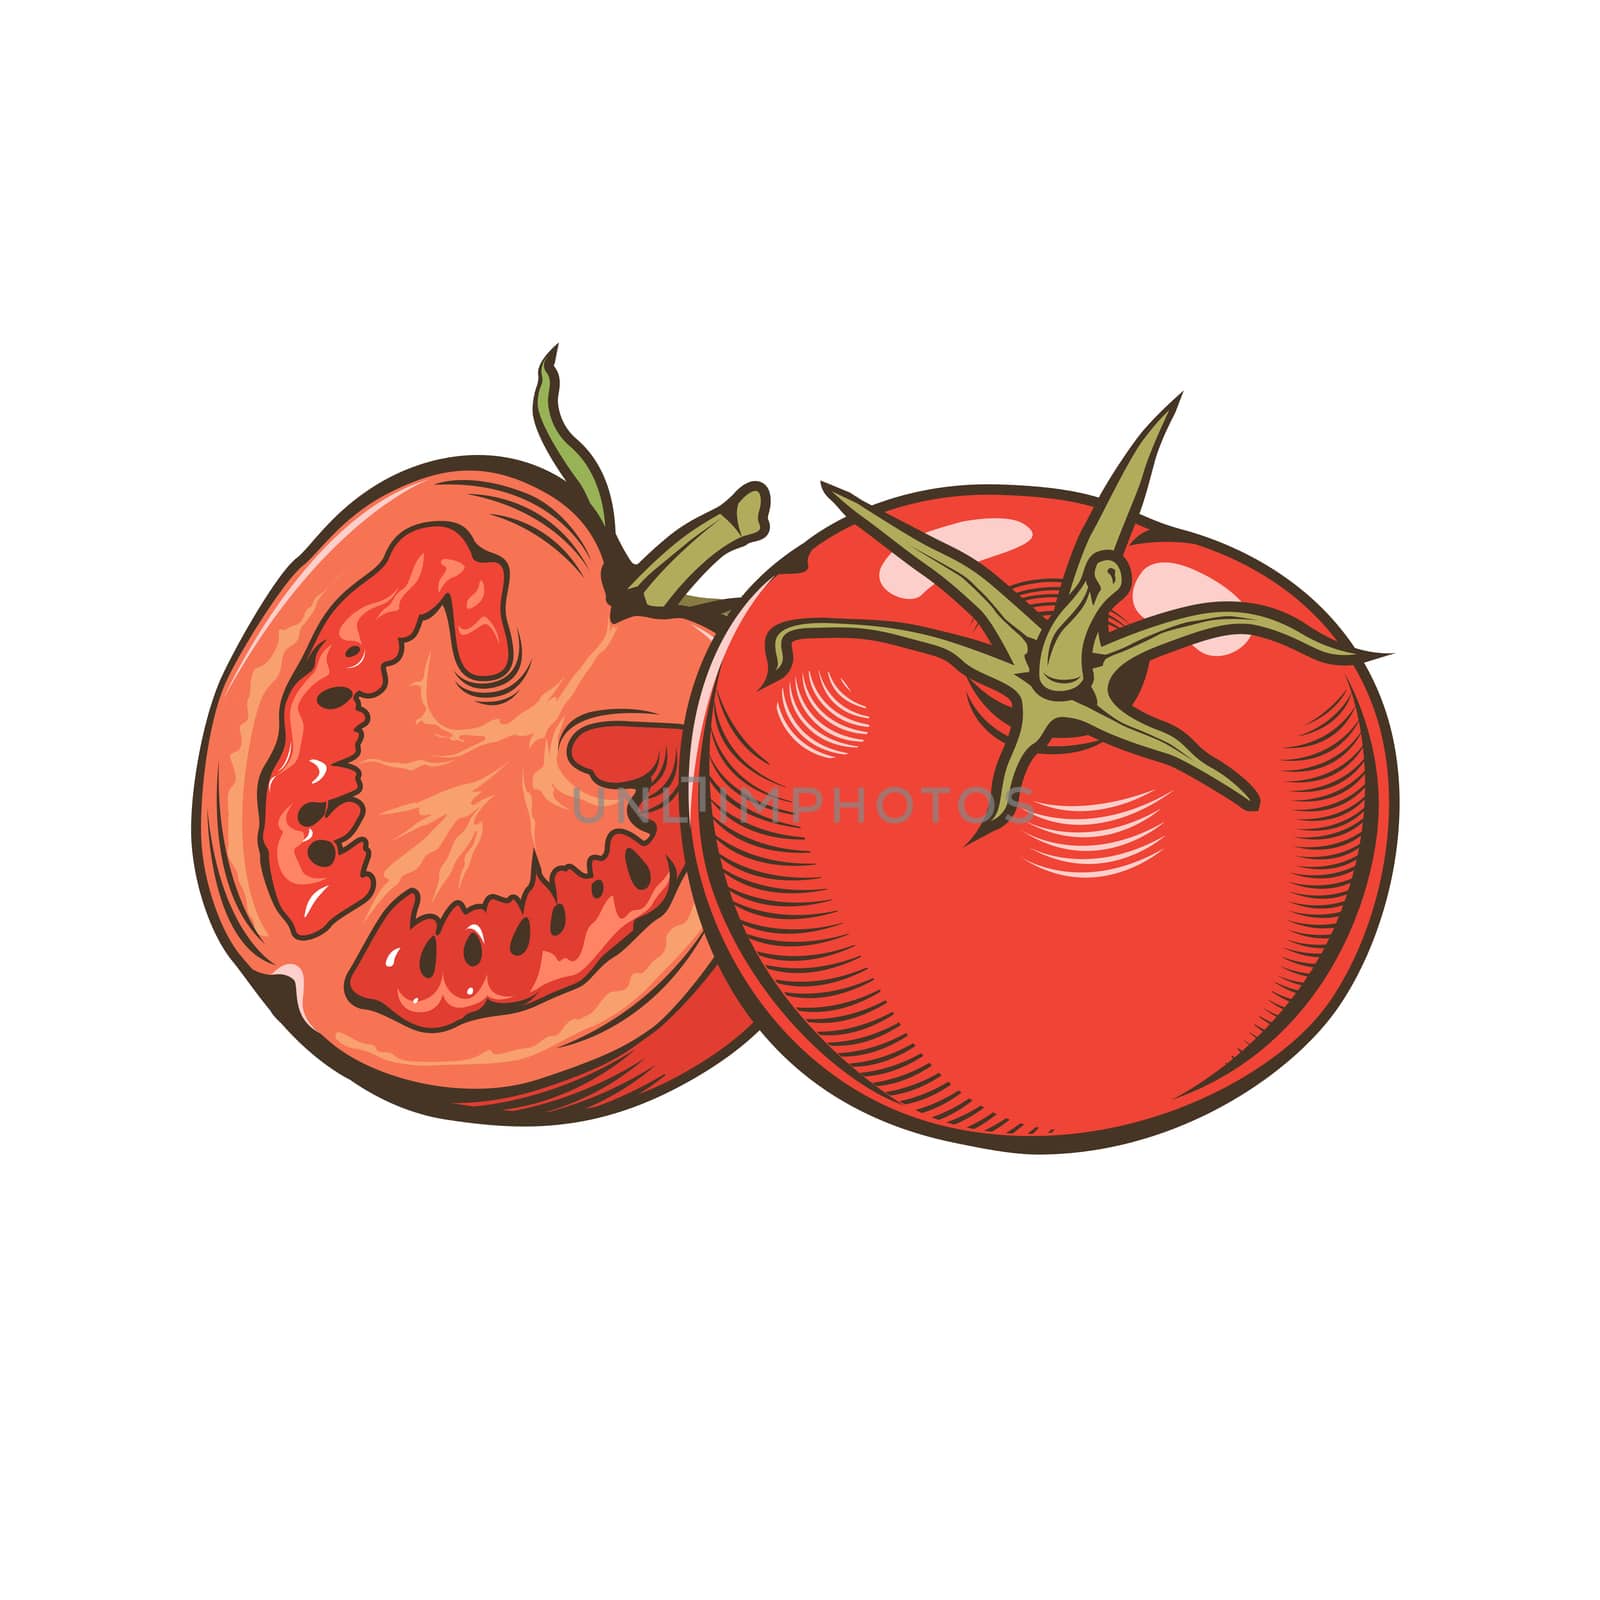 Tomatoes in vintage style. Line art illustration.